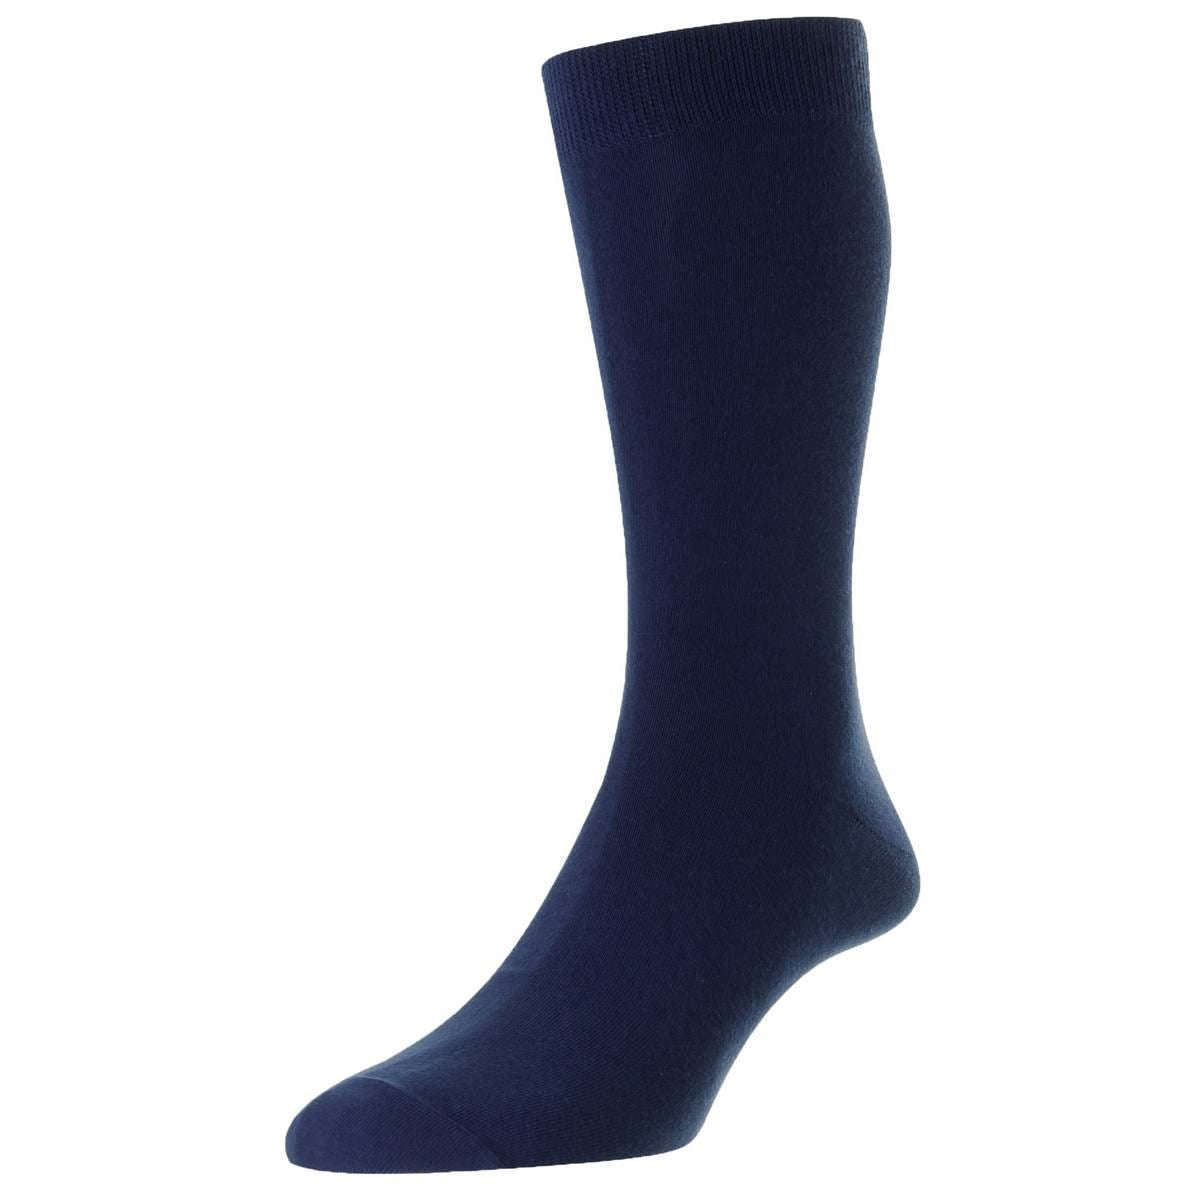 Pantherella Tavener Egyptian Cotton Socks - Ocean Blue